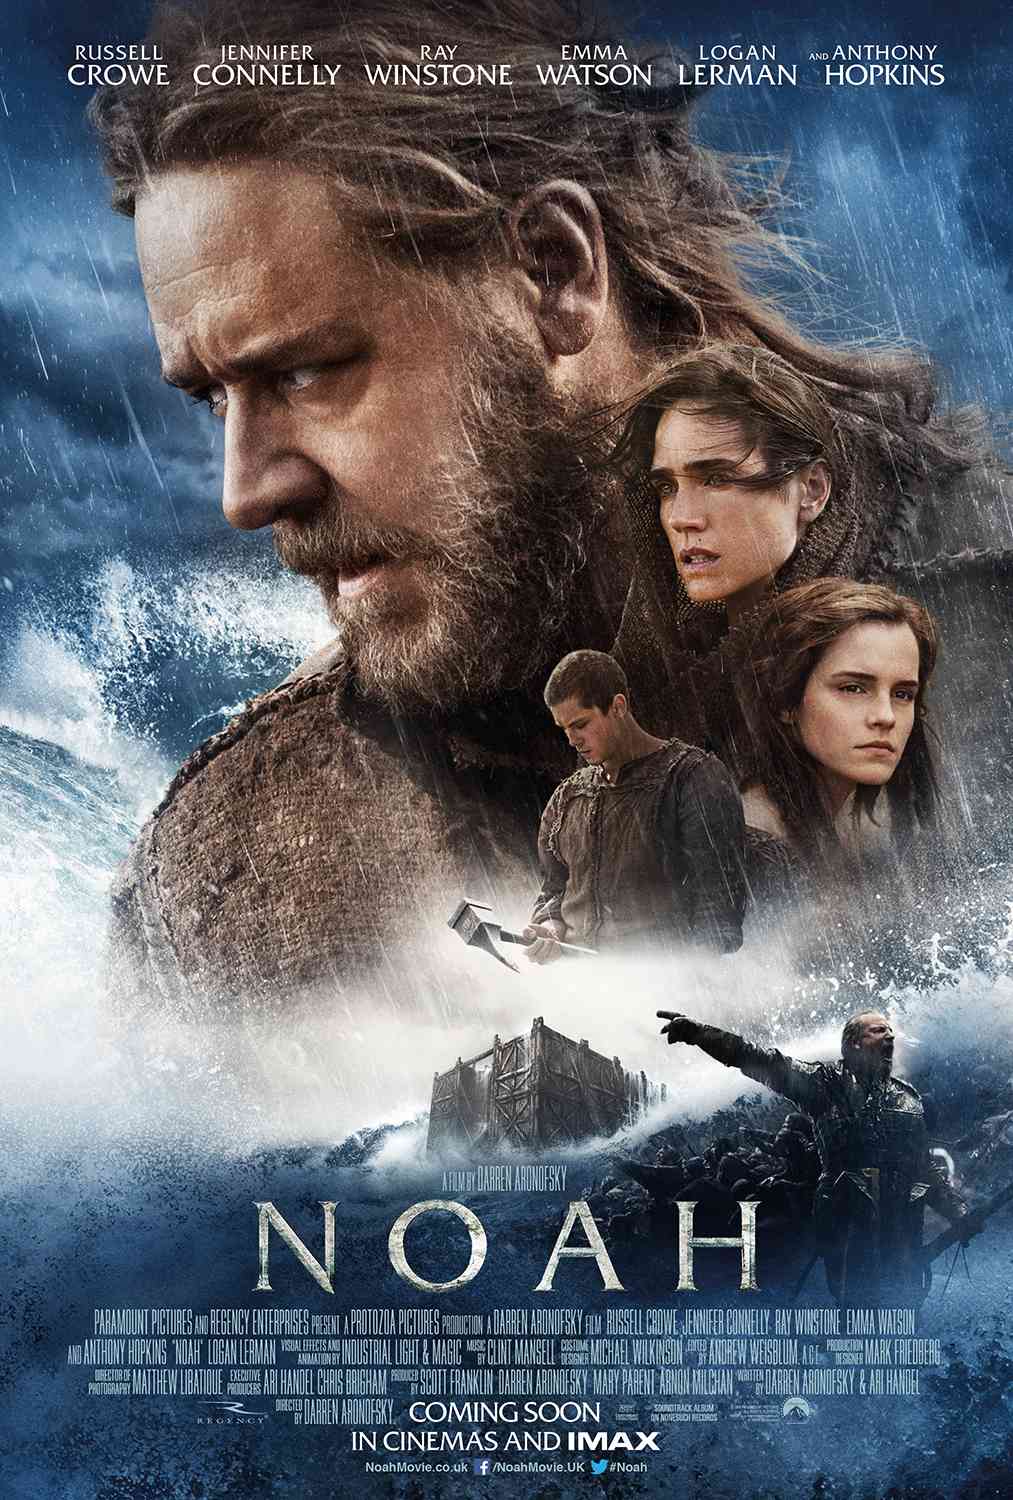 FULL MOVIE: Noah (2014) [Action]